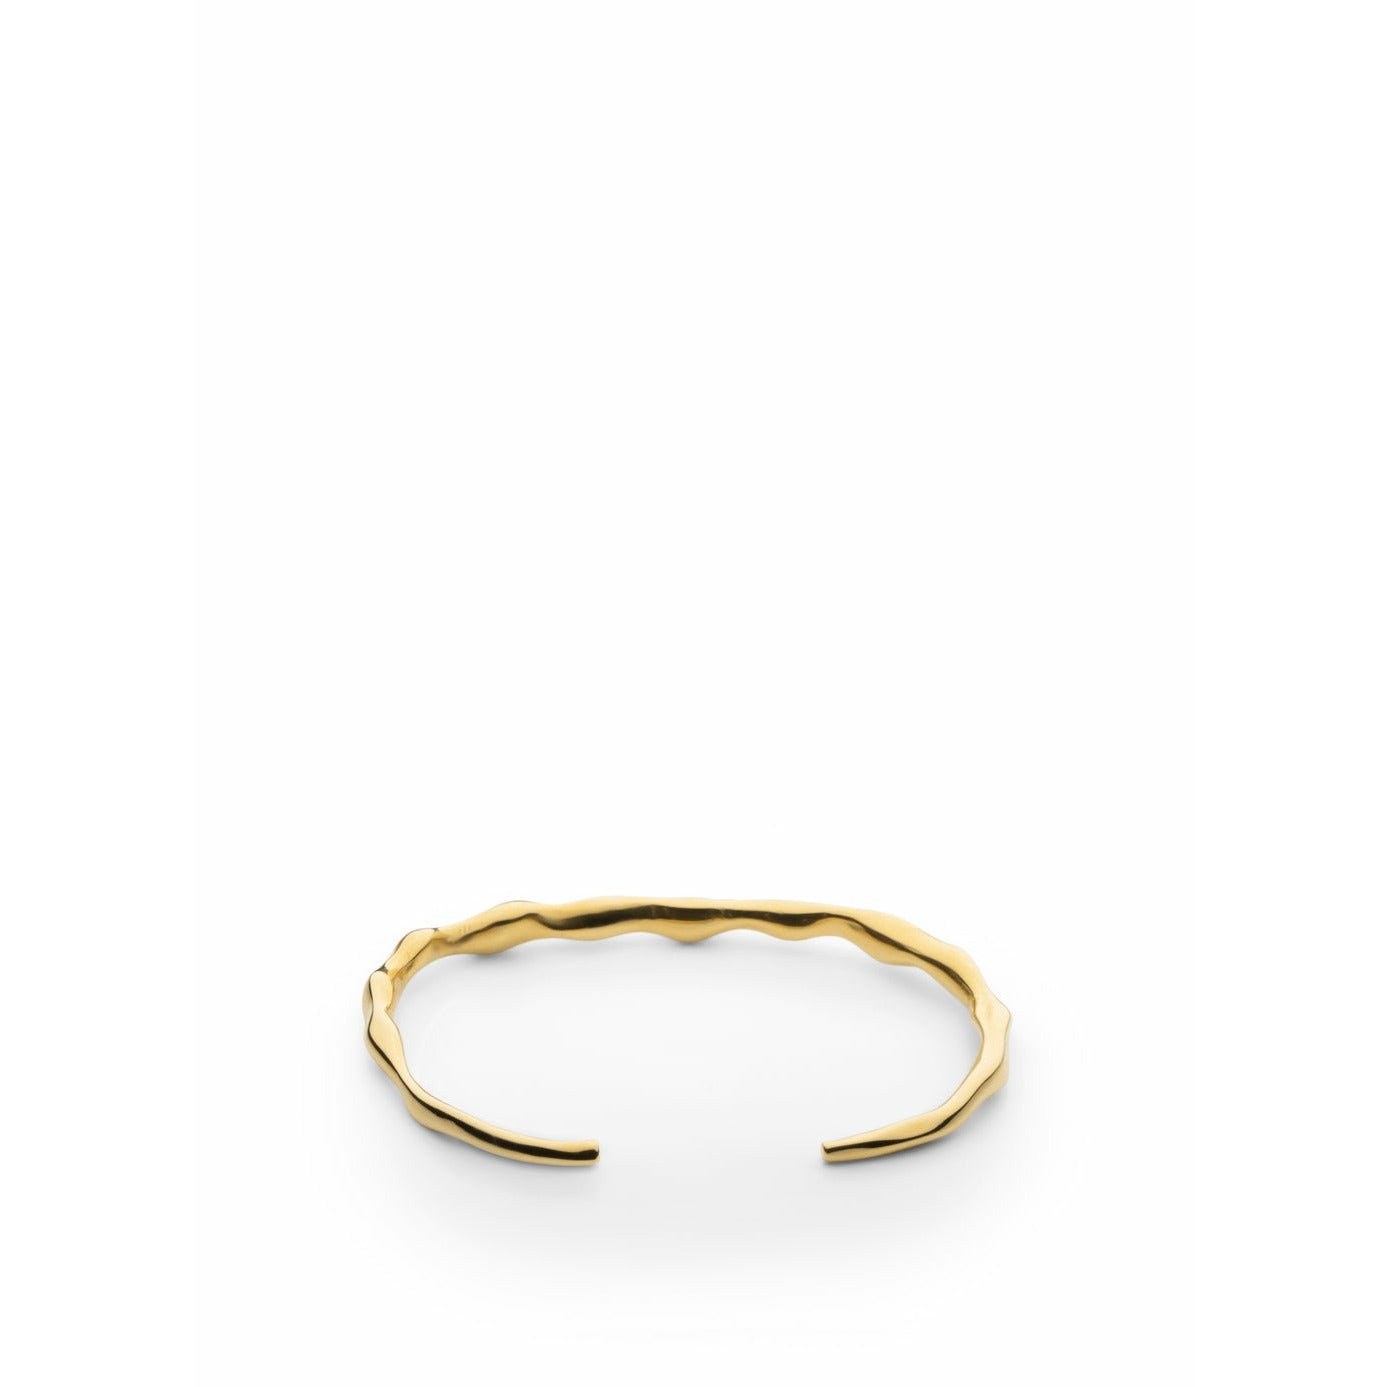 Skultuna Dikke petit armband groot goud vergulde, Ø18,5 cm